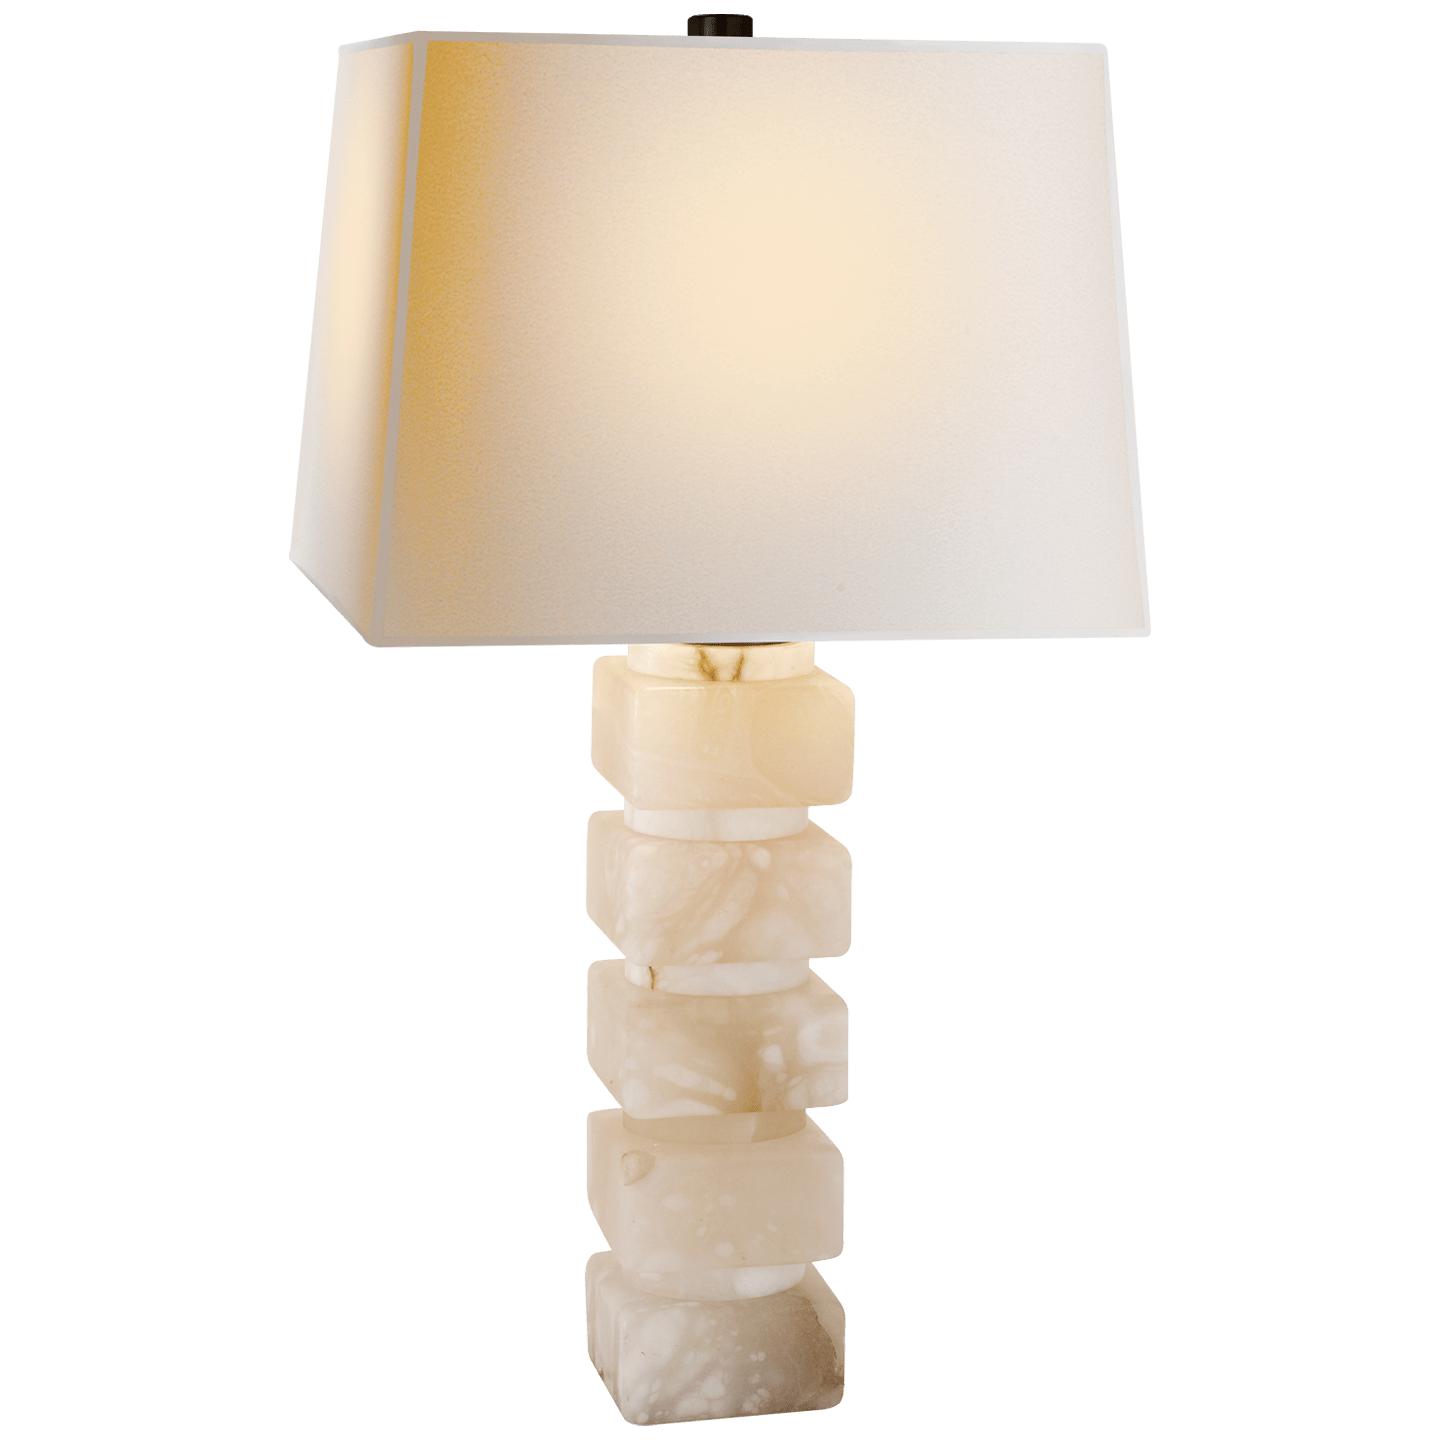 Купить Настольная лампа Square Chunky Stacked Table Lamp в интернет-магазине roooms.ru